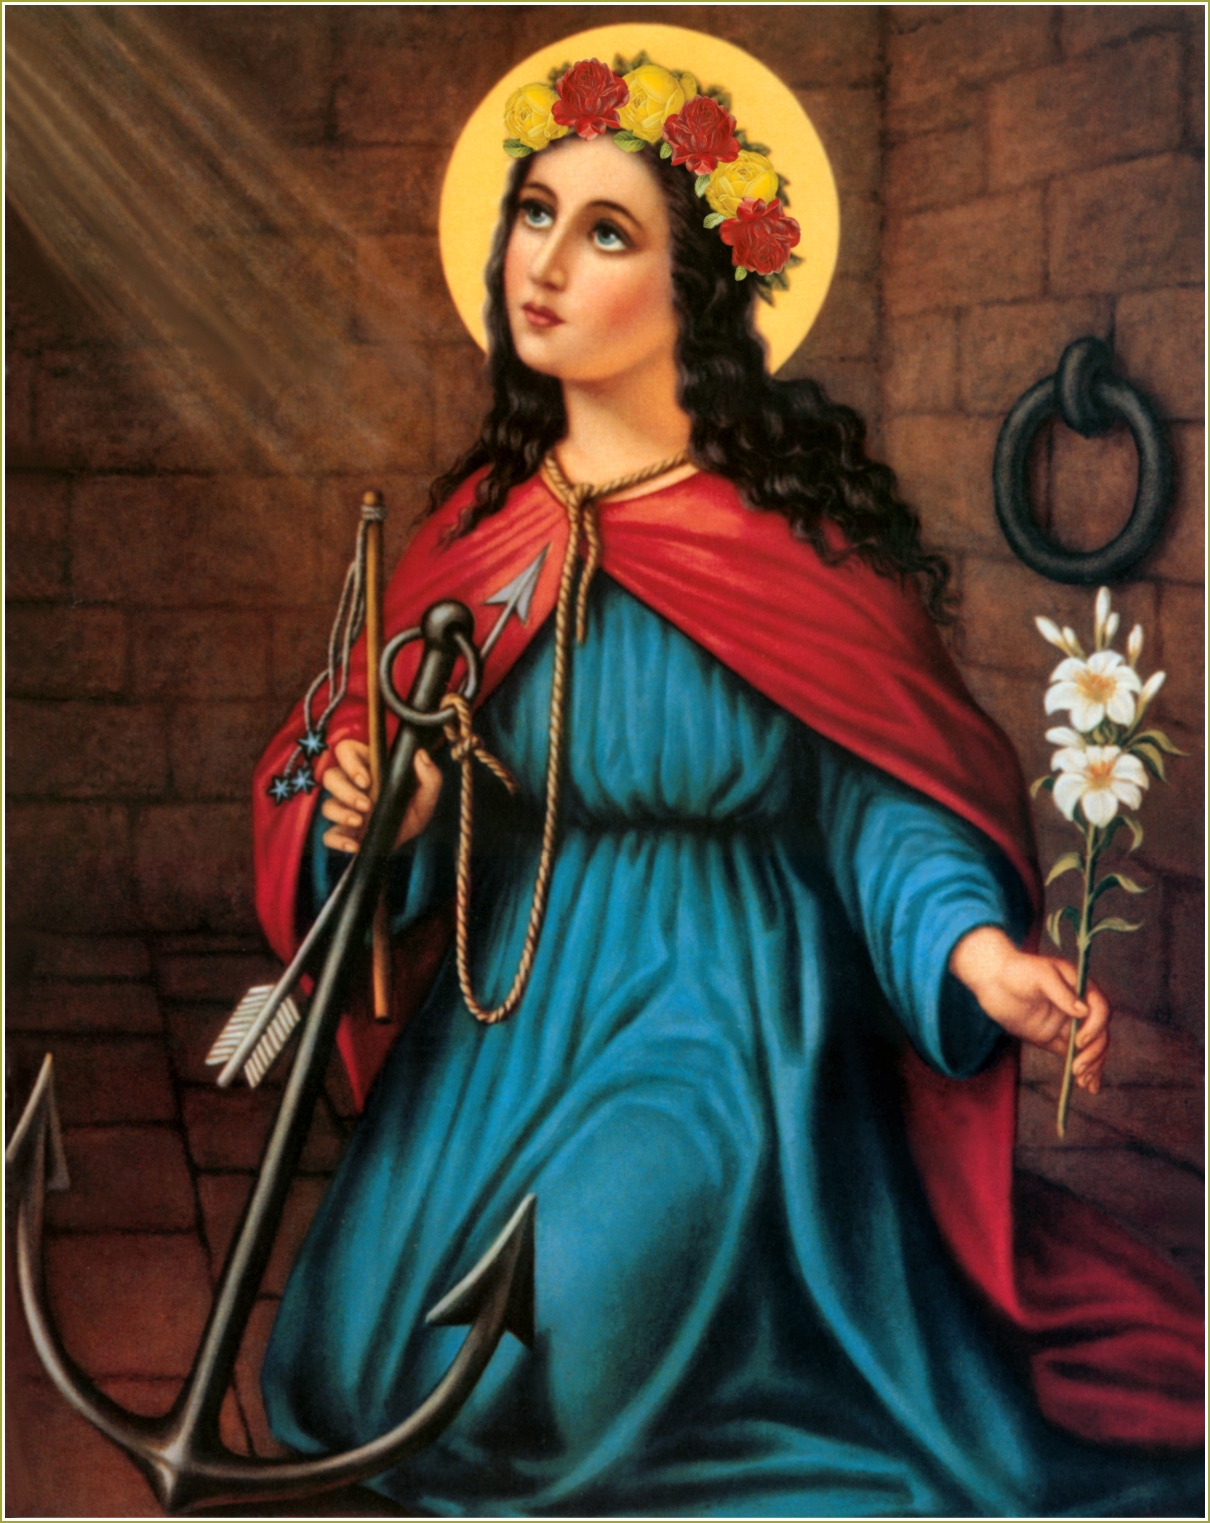 http://www.catholictradition.org/Saints/philomena-3.jpg